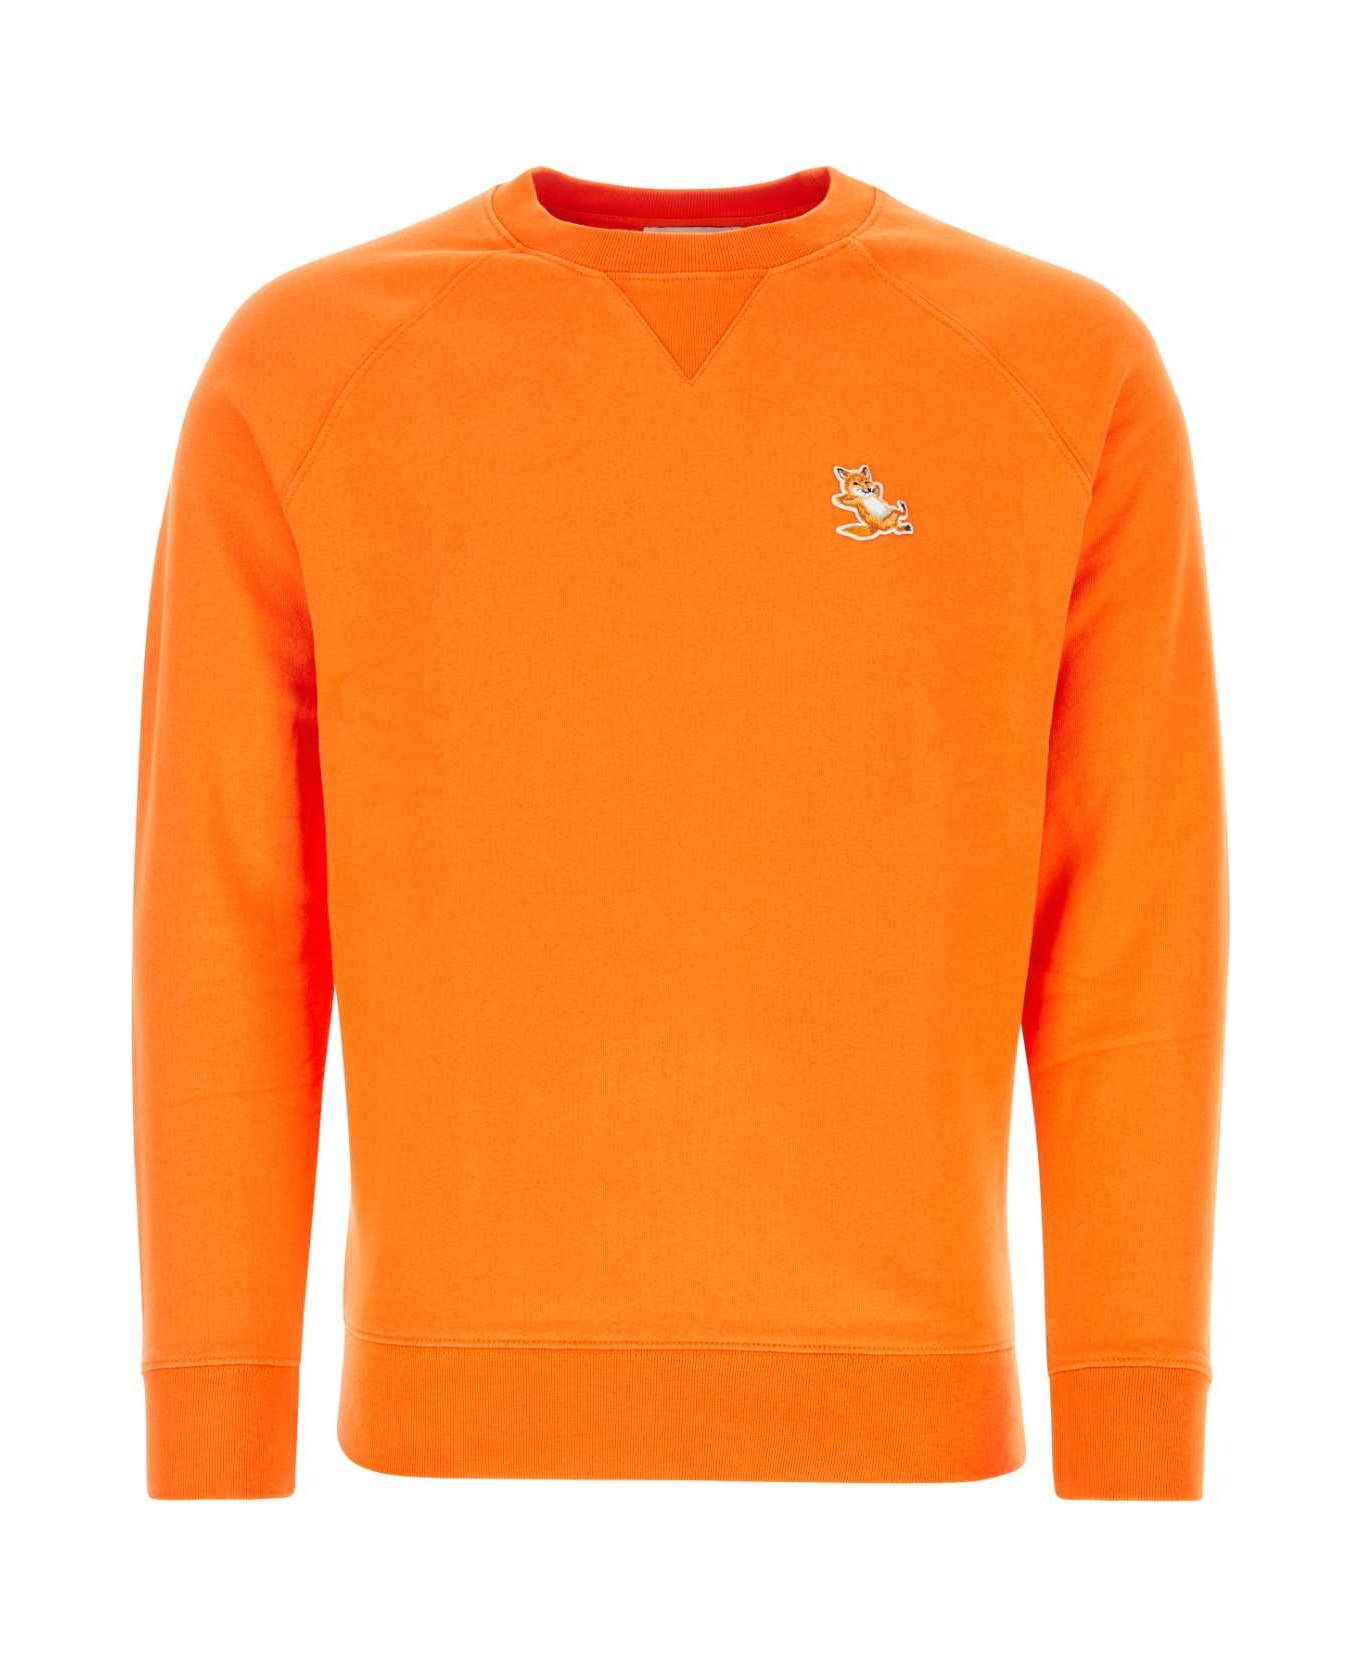 Maison Kitsuné Orange Cotton Sweatshirt - P851 フリース